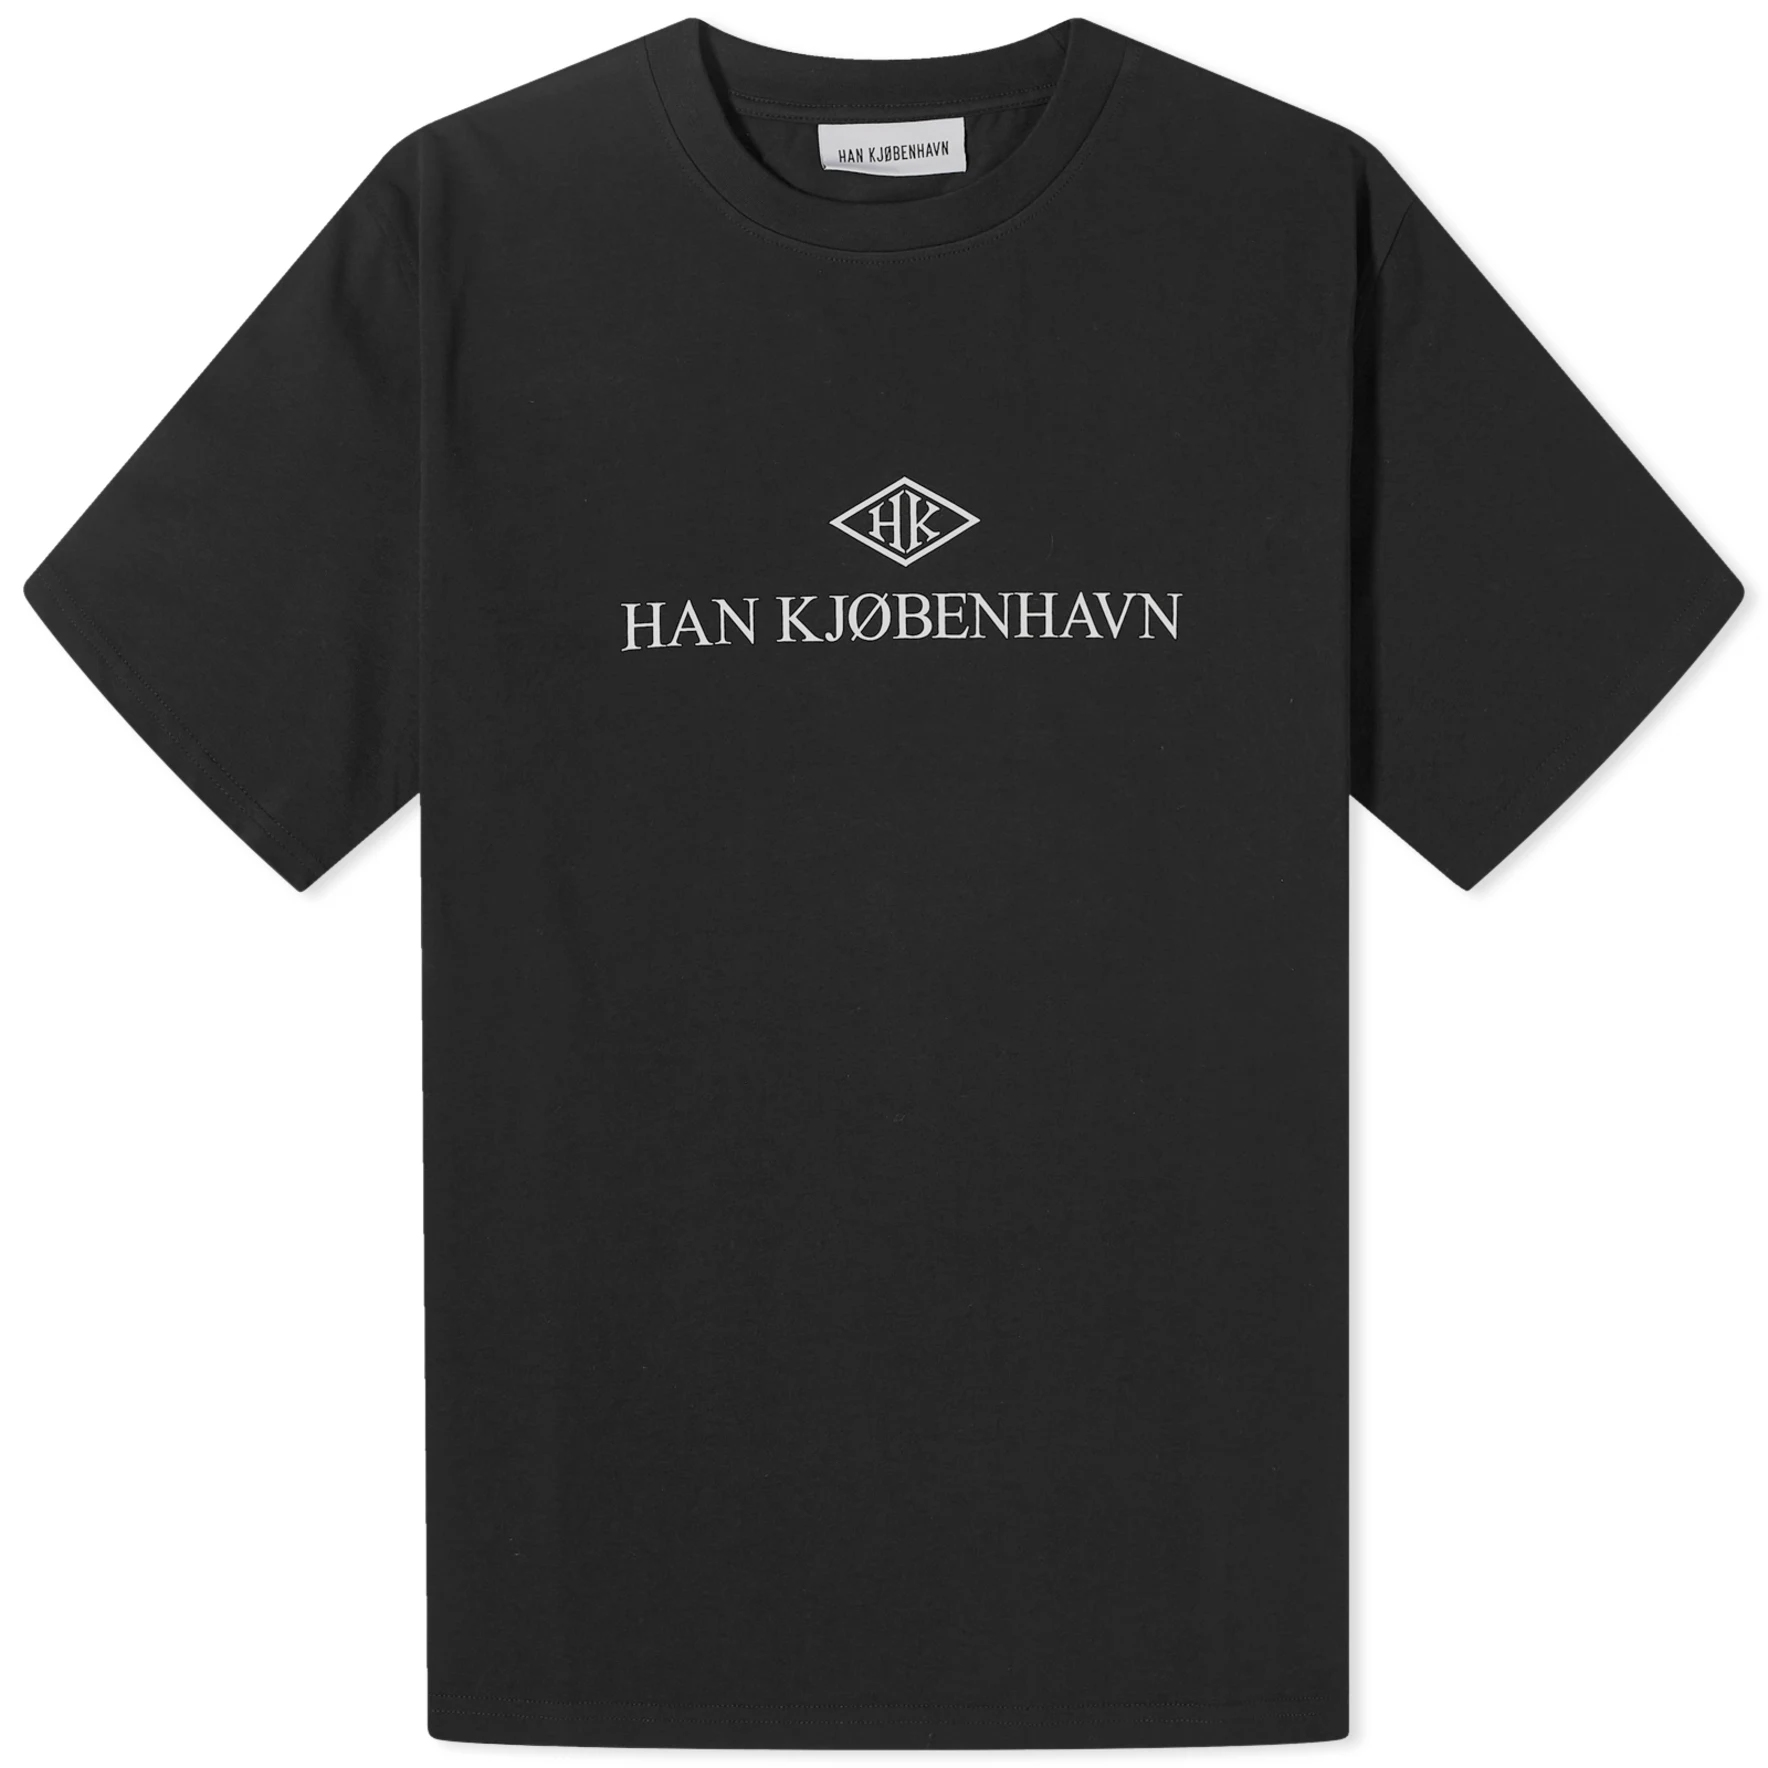 поло han kjobenhavn размер s черный Футболка Han Kjobenhavn Hk Logo Boxy, черный